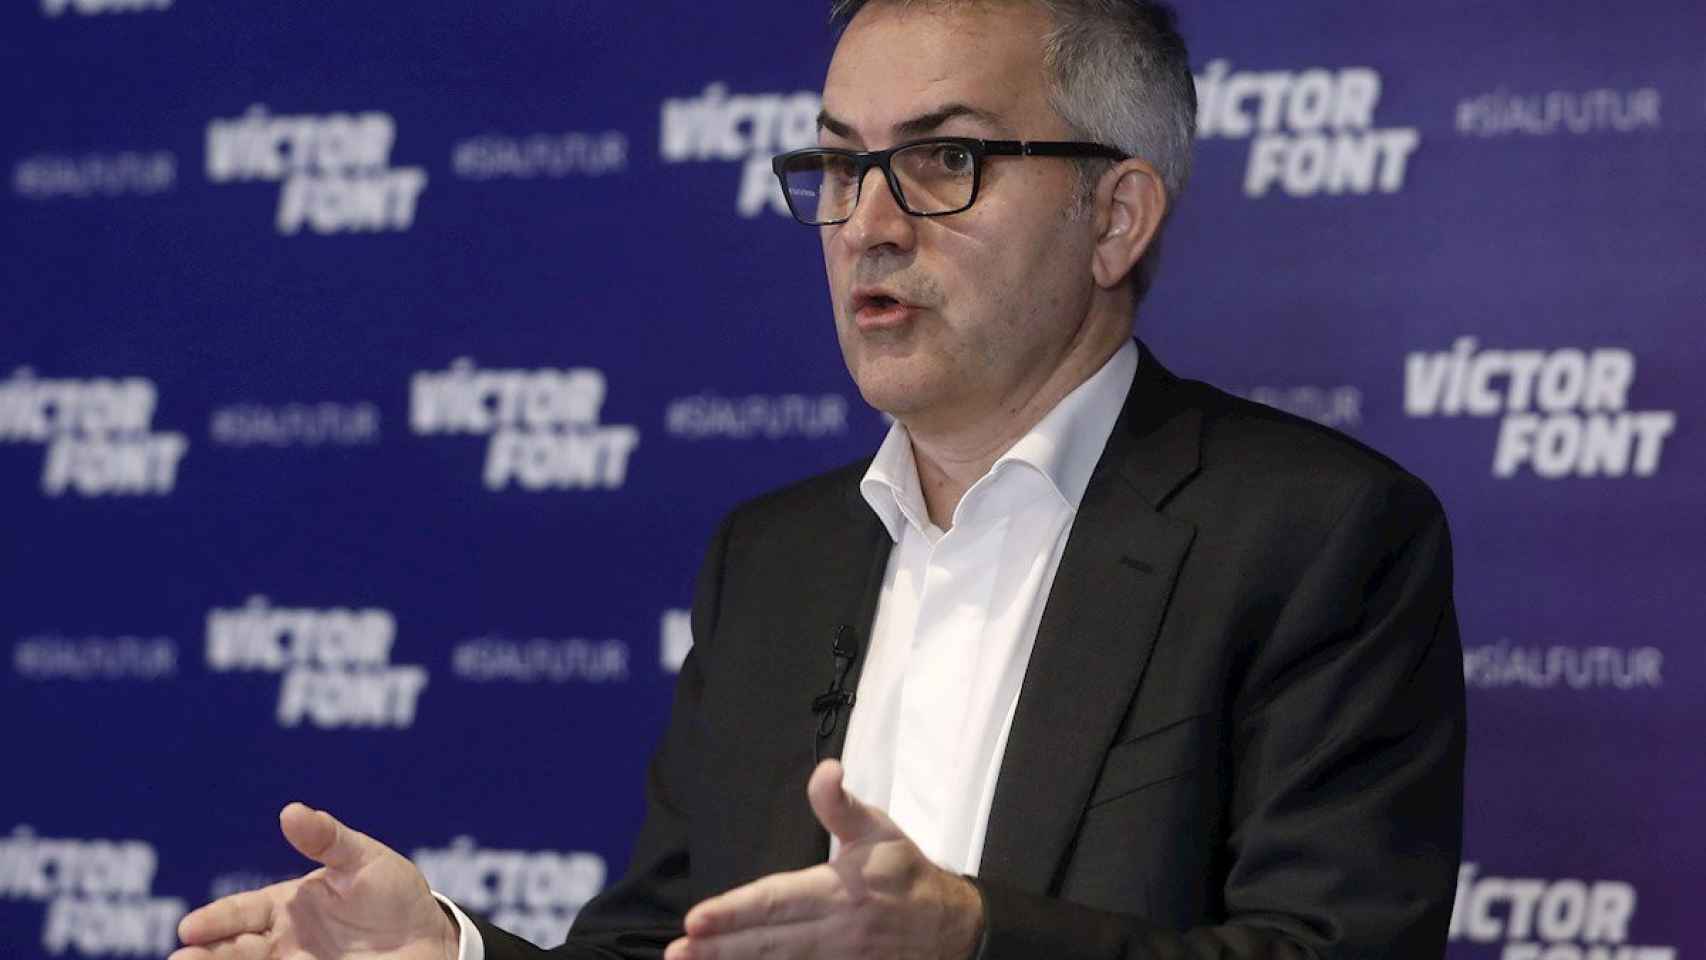 Víctor Font en un acto de la candidatura / EFE